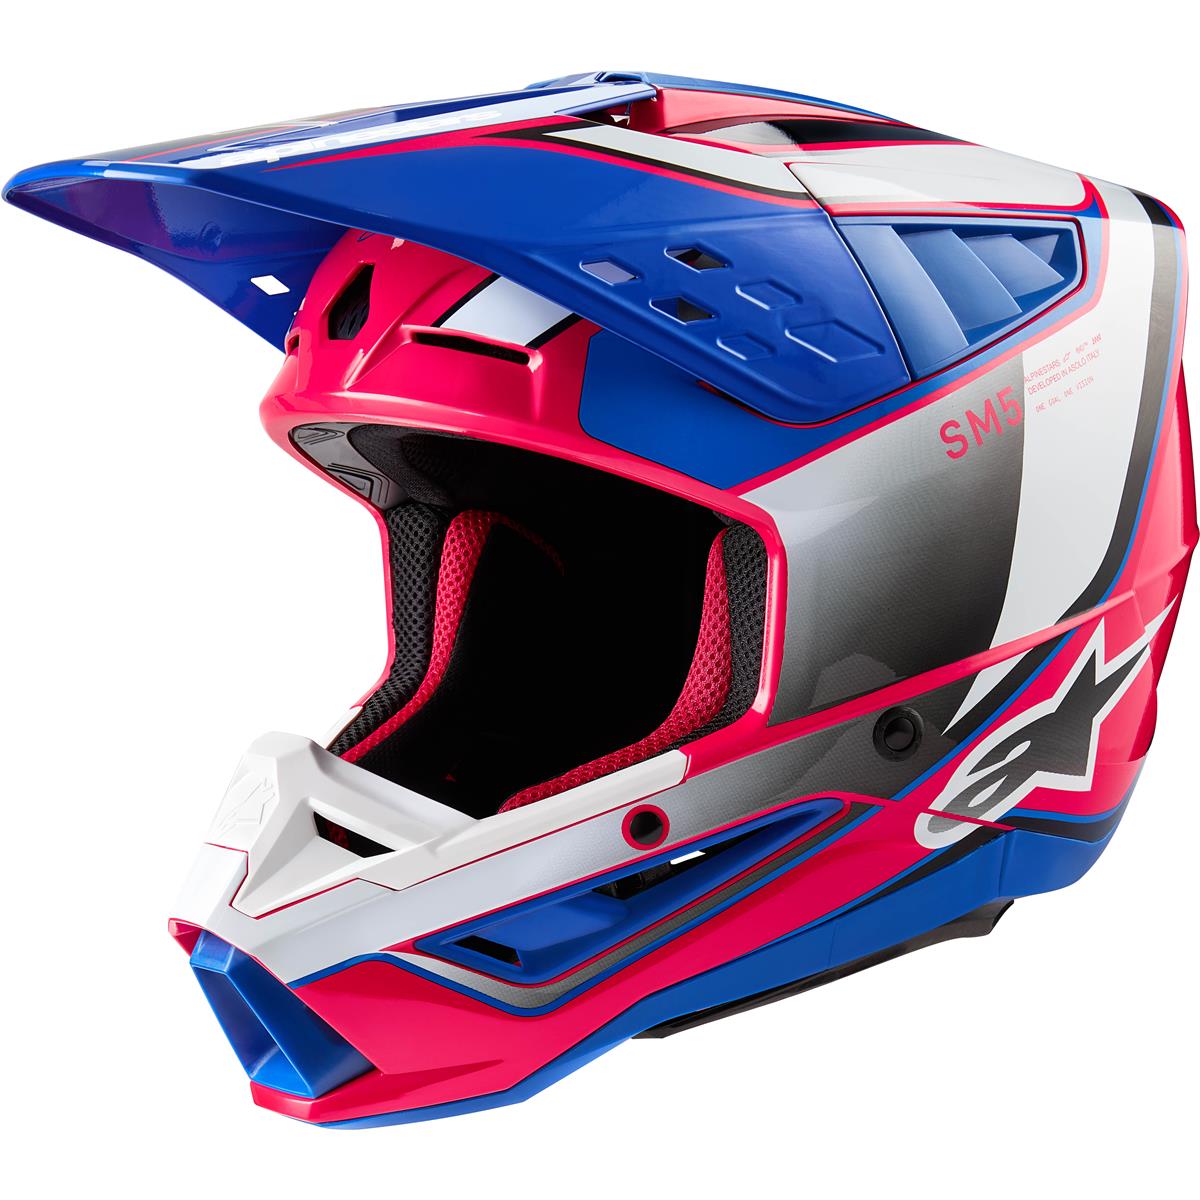 Alpinestars Motocross-Helm S-M5 Sail - Weiß/Diva Pink/Blau/Glossy